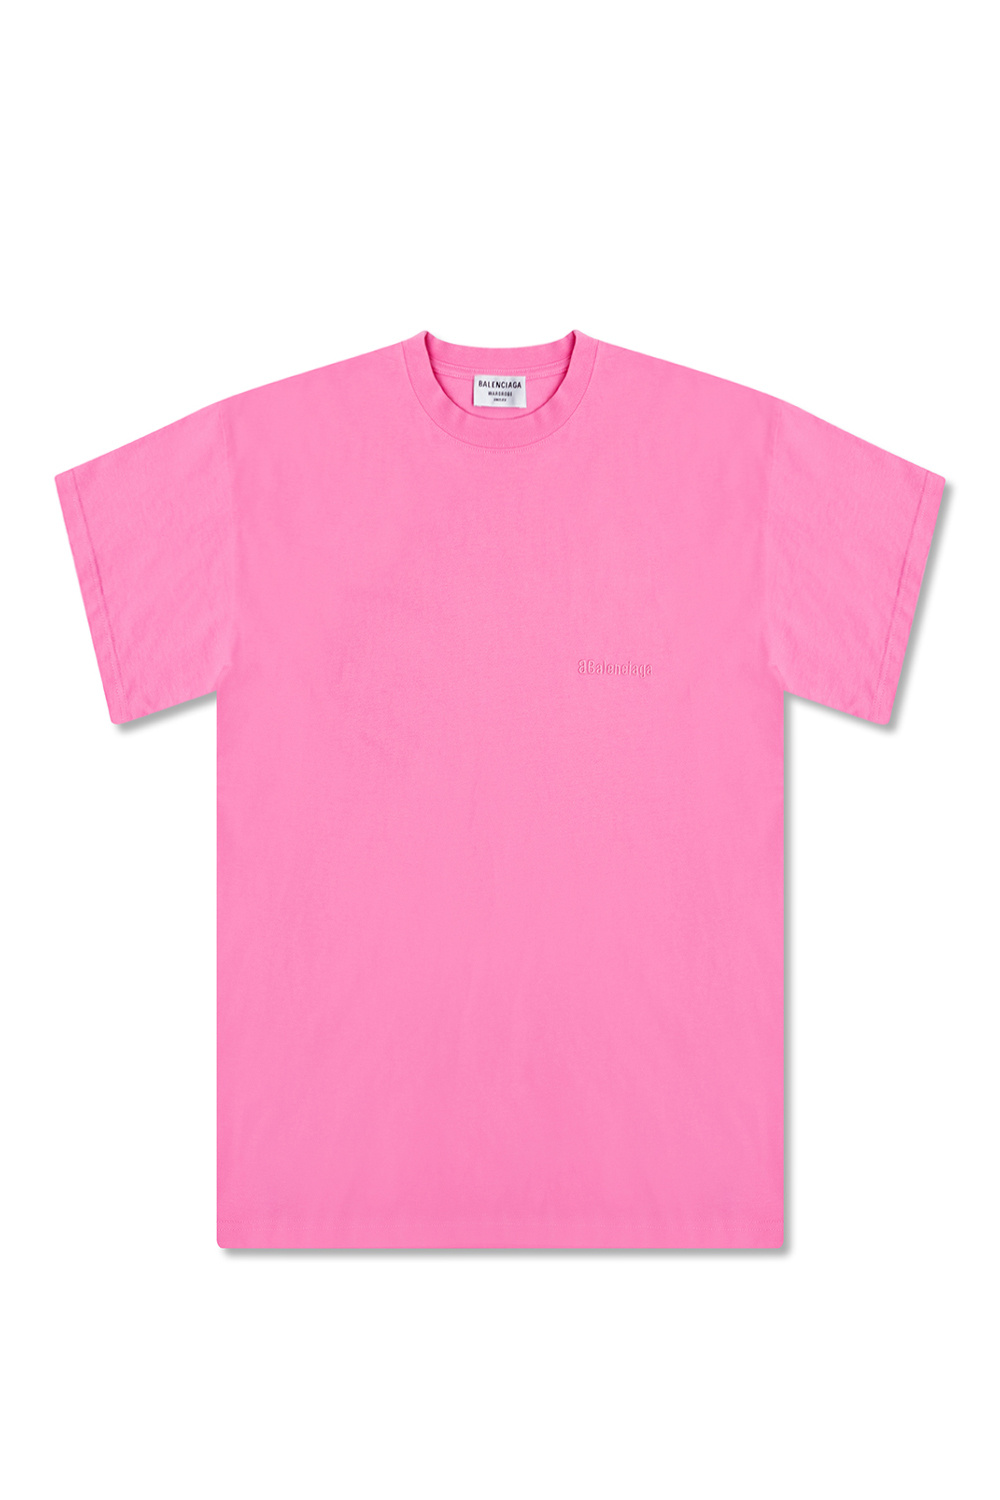 Balenciaga Political Campaign Tshirt in Vintage Jersey in Pink  ROOYAS